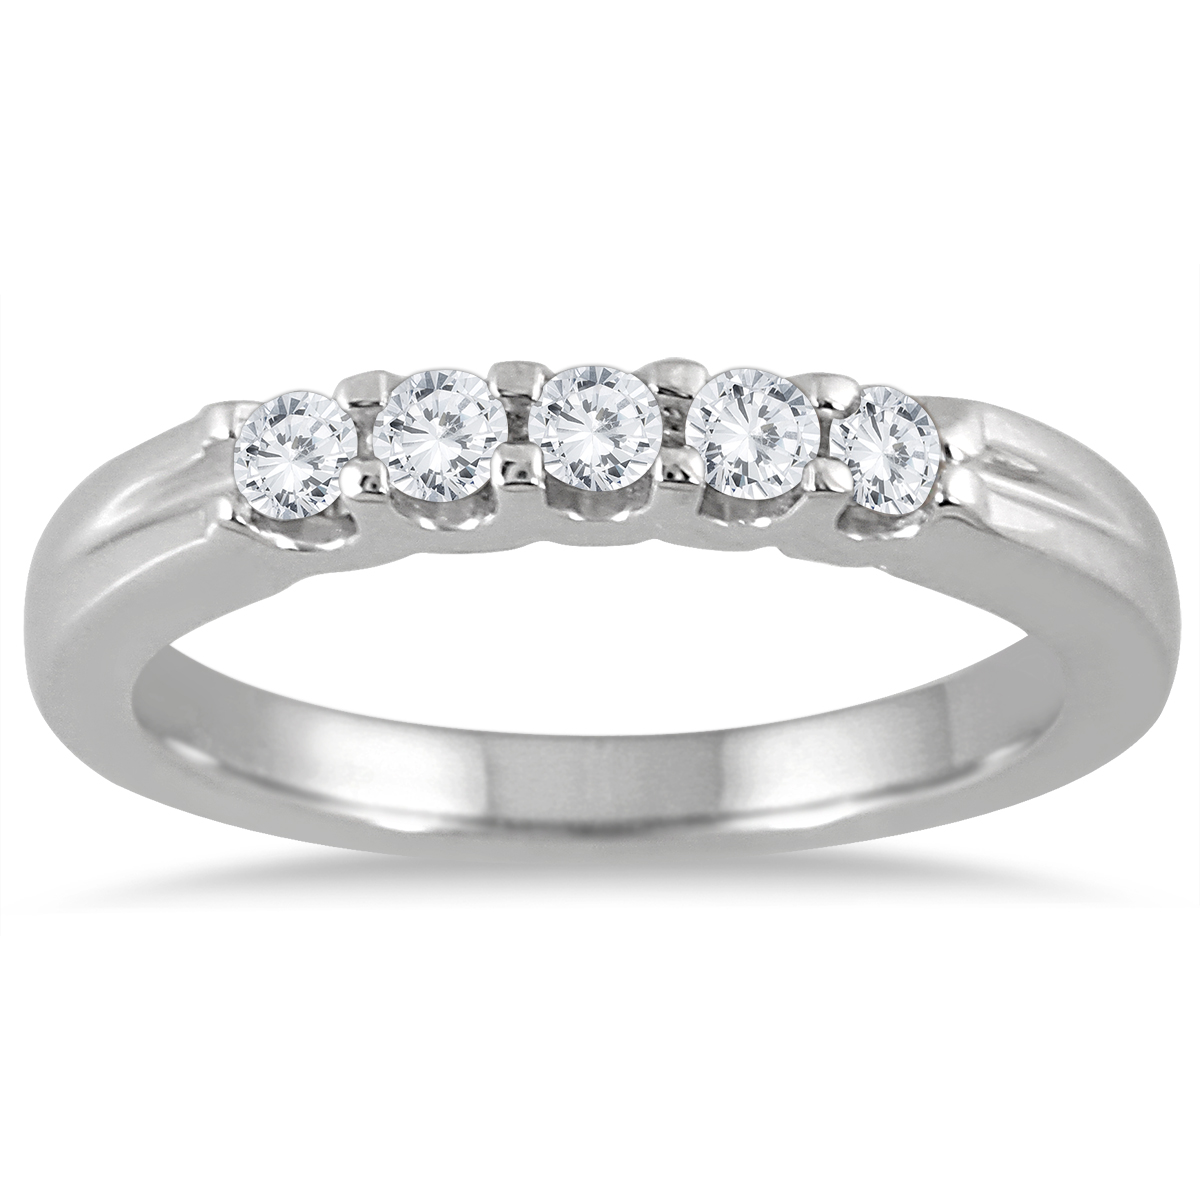 1/4 Carat TW Five Stone Diamond Wedding Band in 14K White Gold